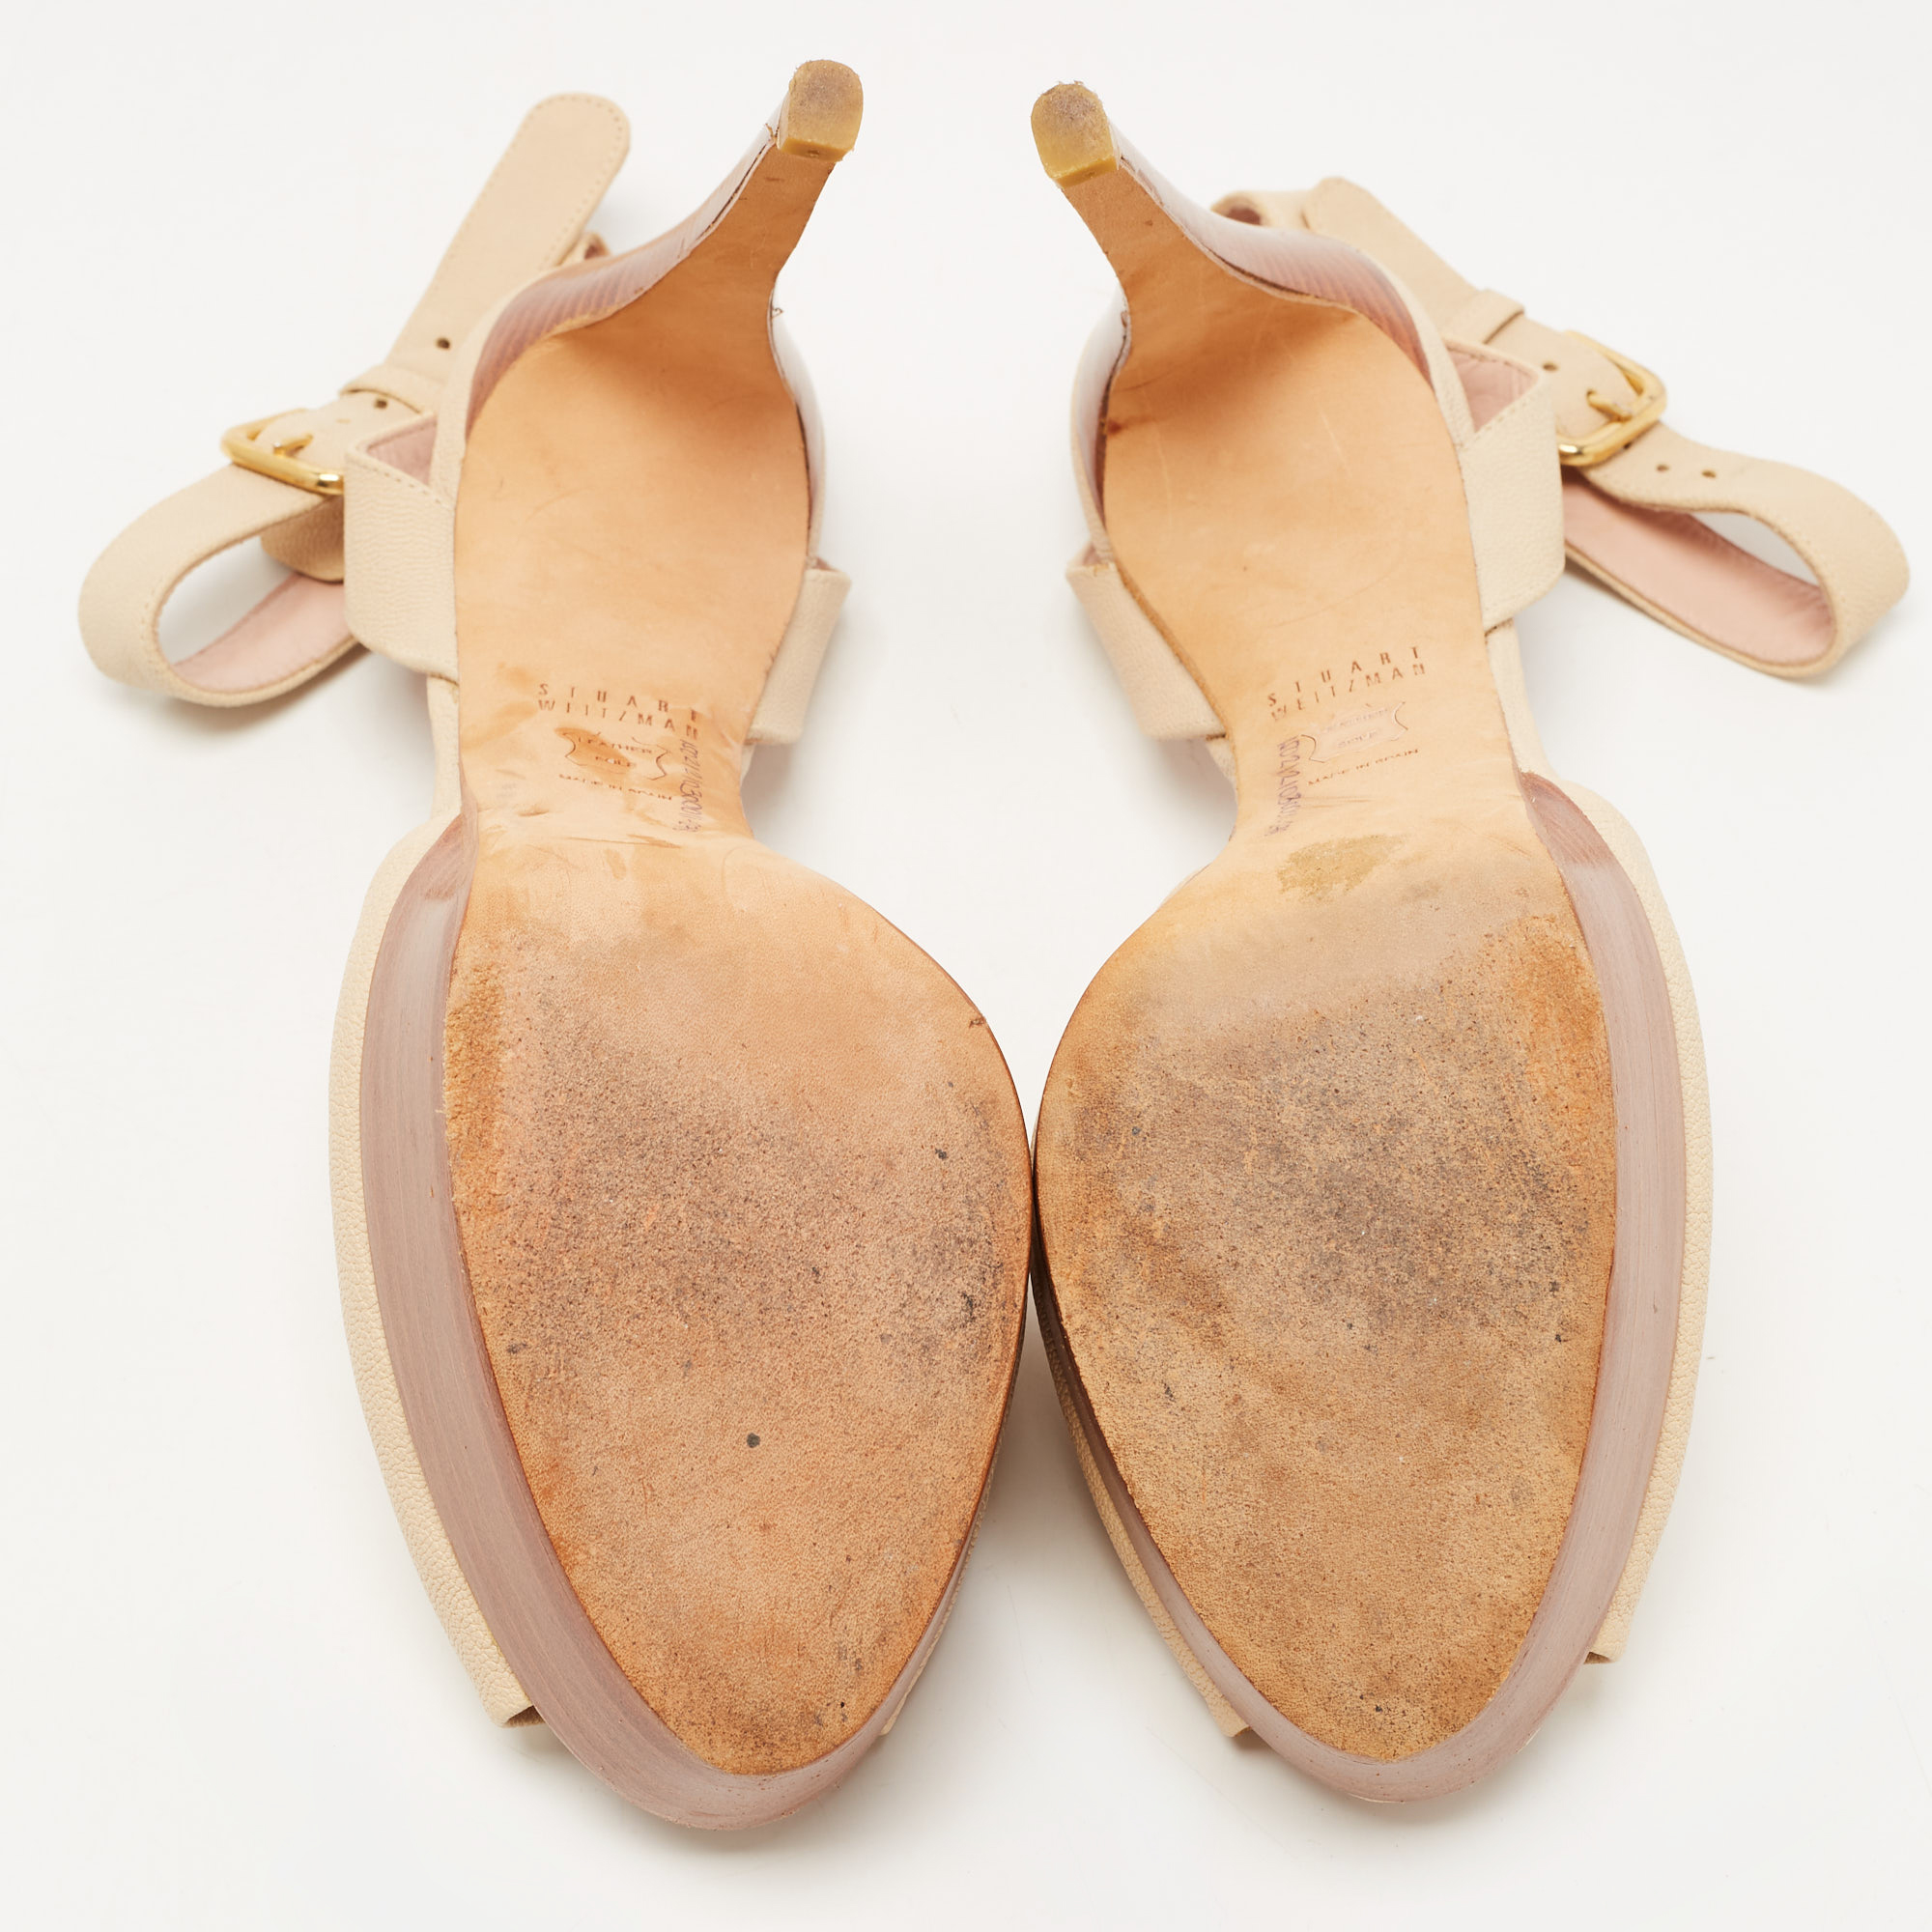 Stuart Weitzman Beige Leather Ankle Strap Platform Sandals Size 39